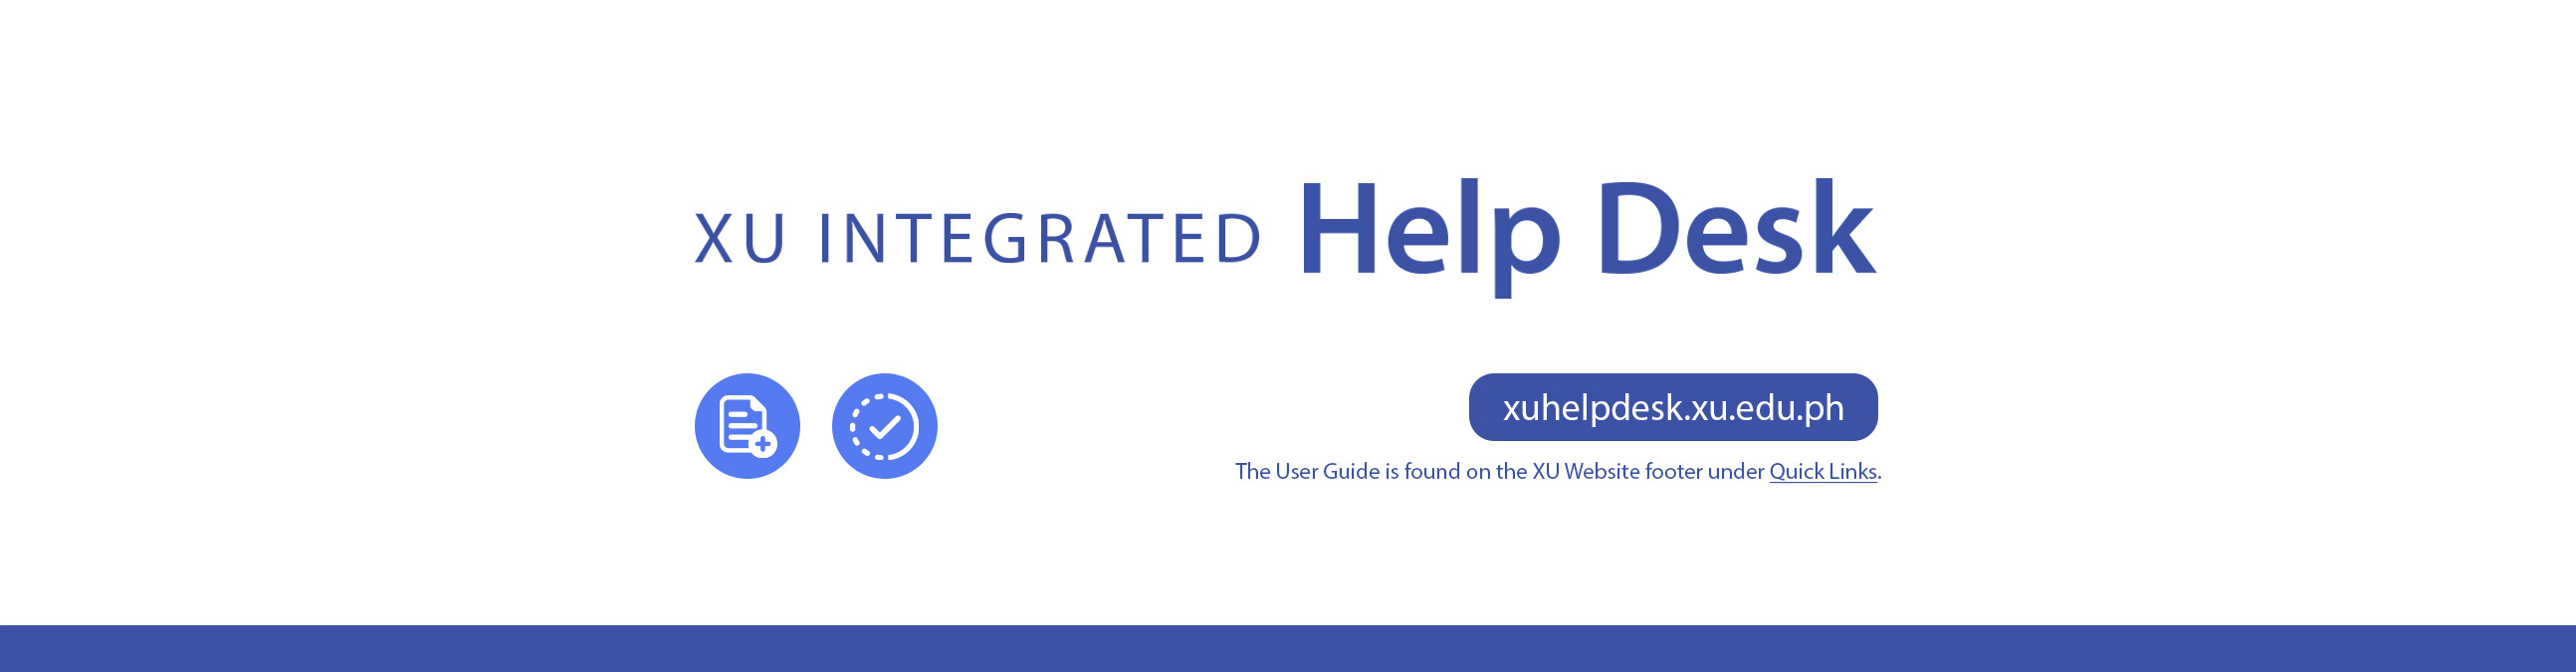 06162023.XU Integrated Help Desk Web Banner